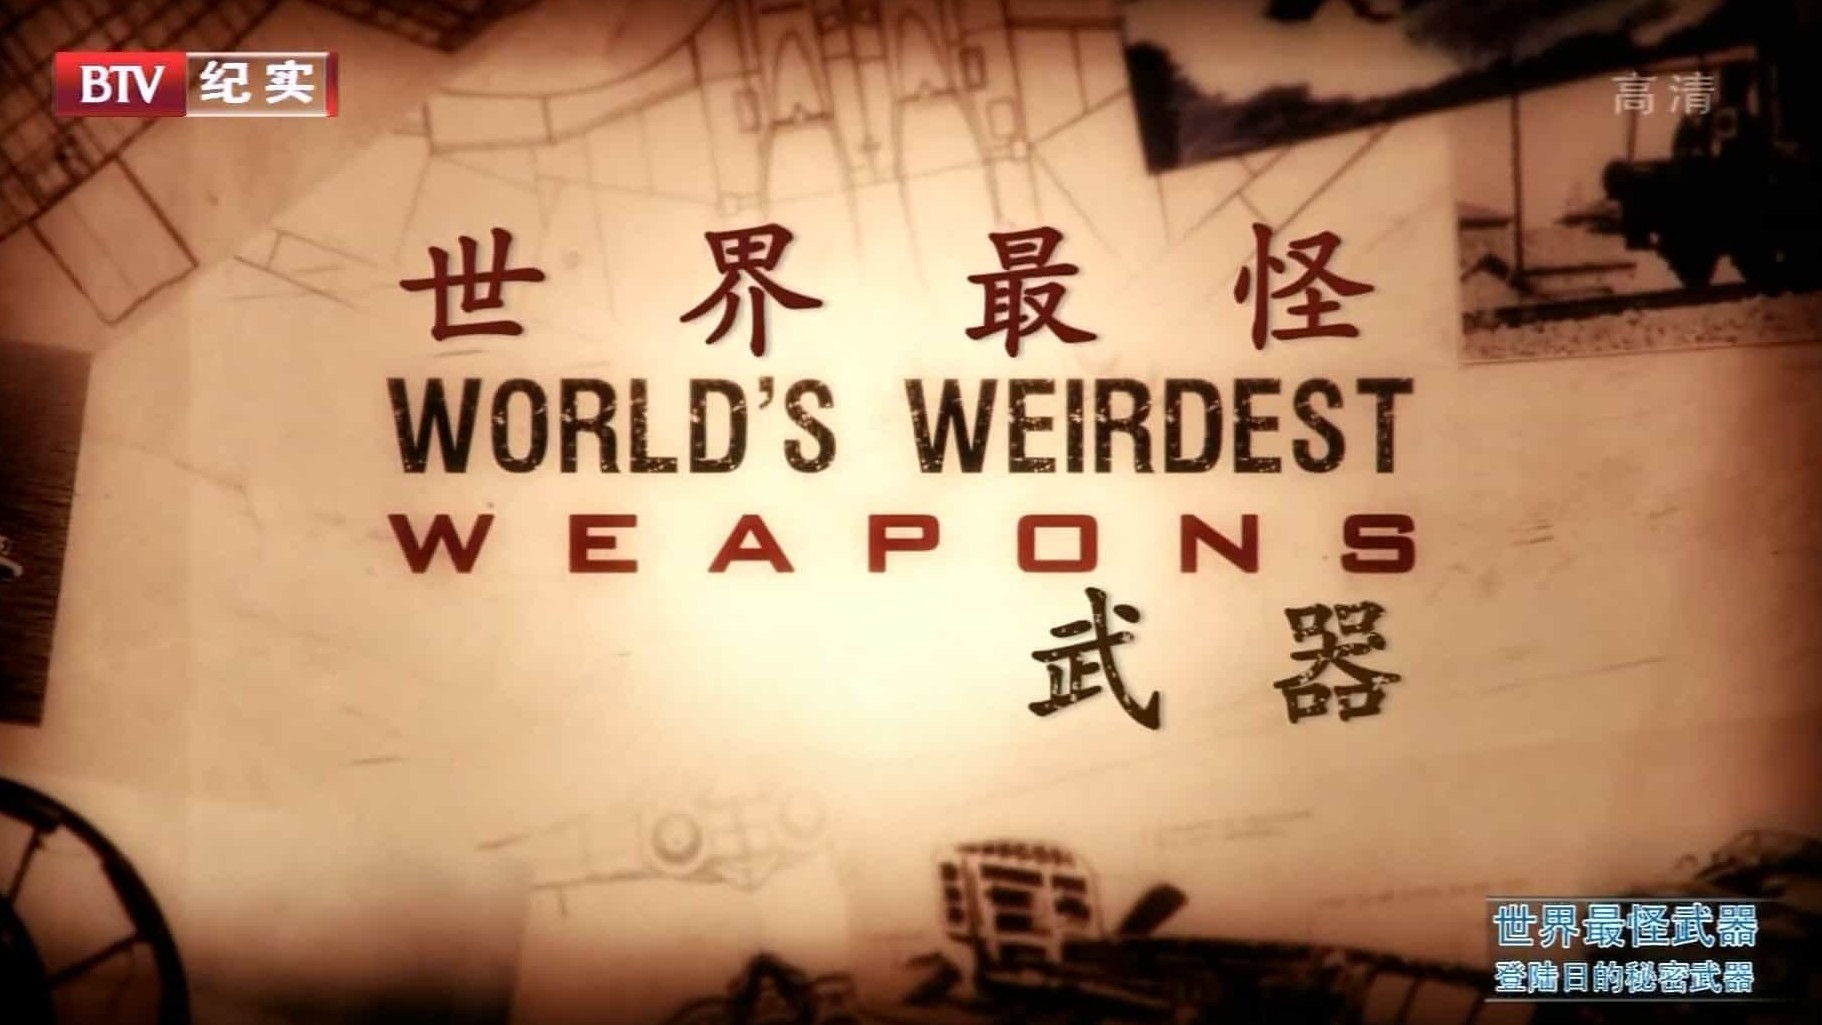 BTV/BBC《世界最怪武器 World’s Weirdest Weapons》全6集 英语内嵌中字 1080I高清纪录片